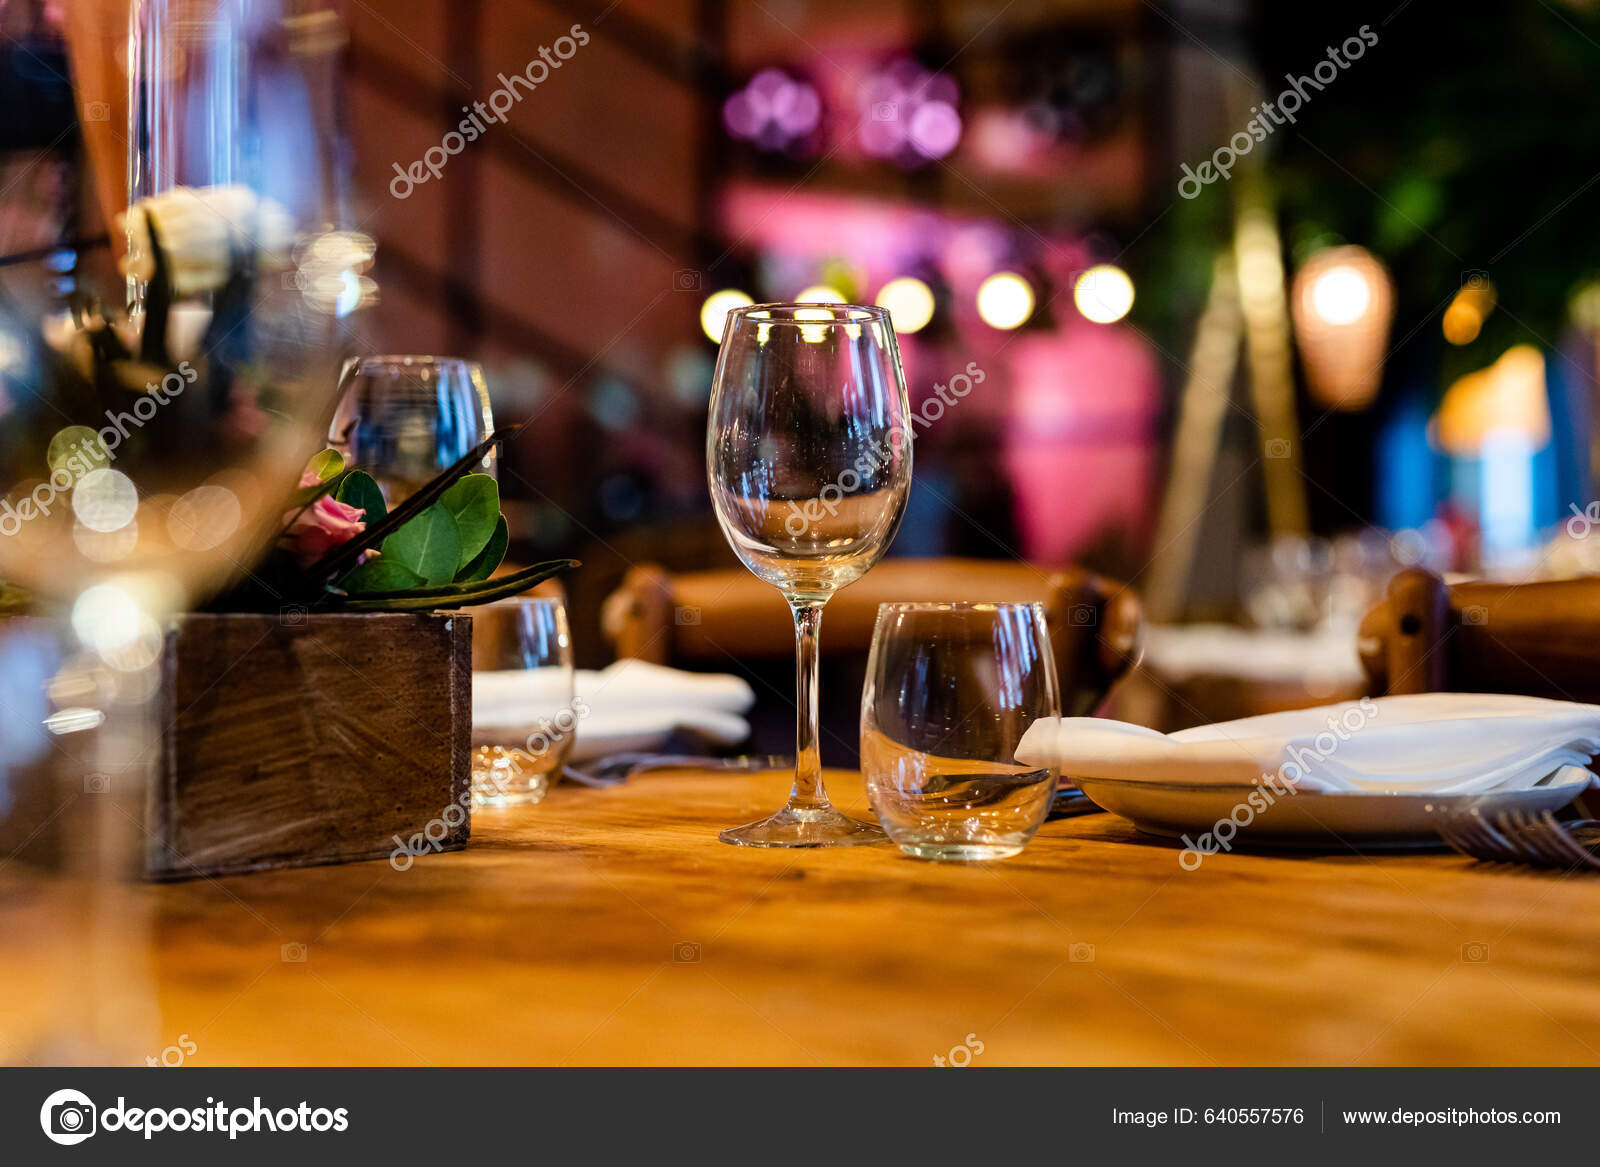 https://st5.depositphotos.com/21977270/64055/i/1600/depositphotos_640557576-stock-photo-luxury-table-settings-fine-dining.jpg